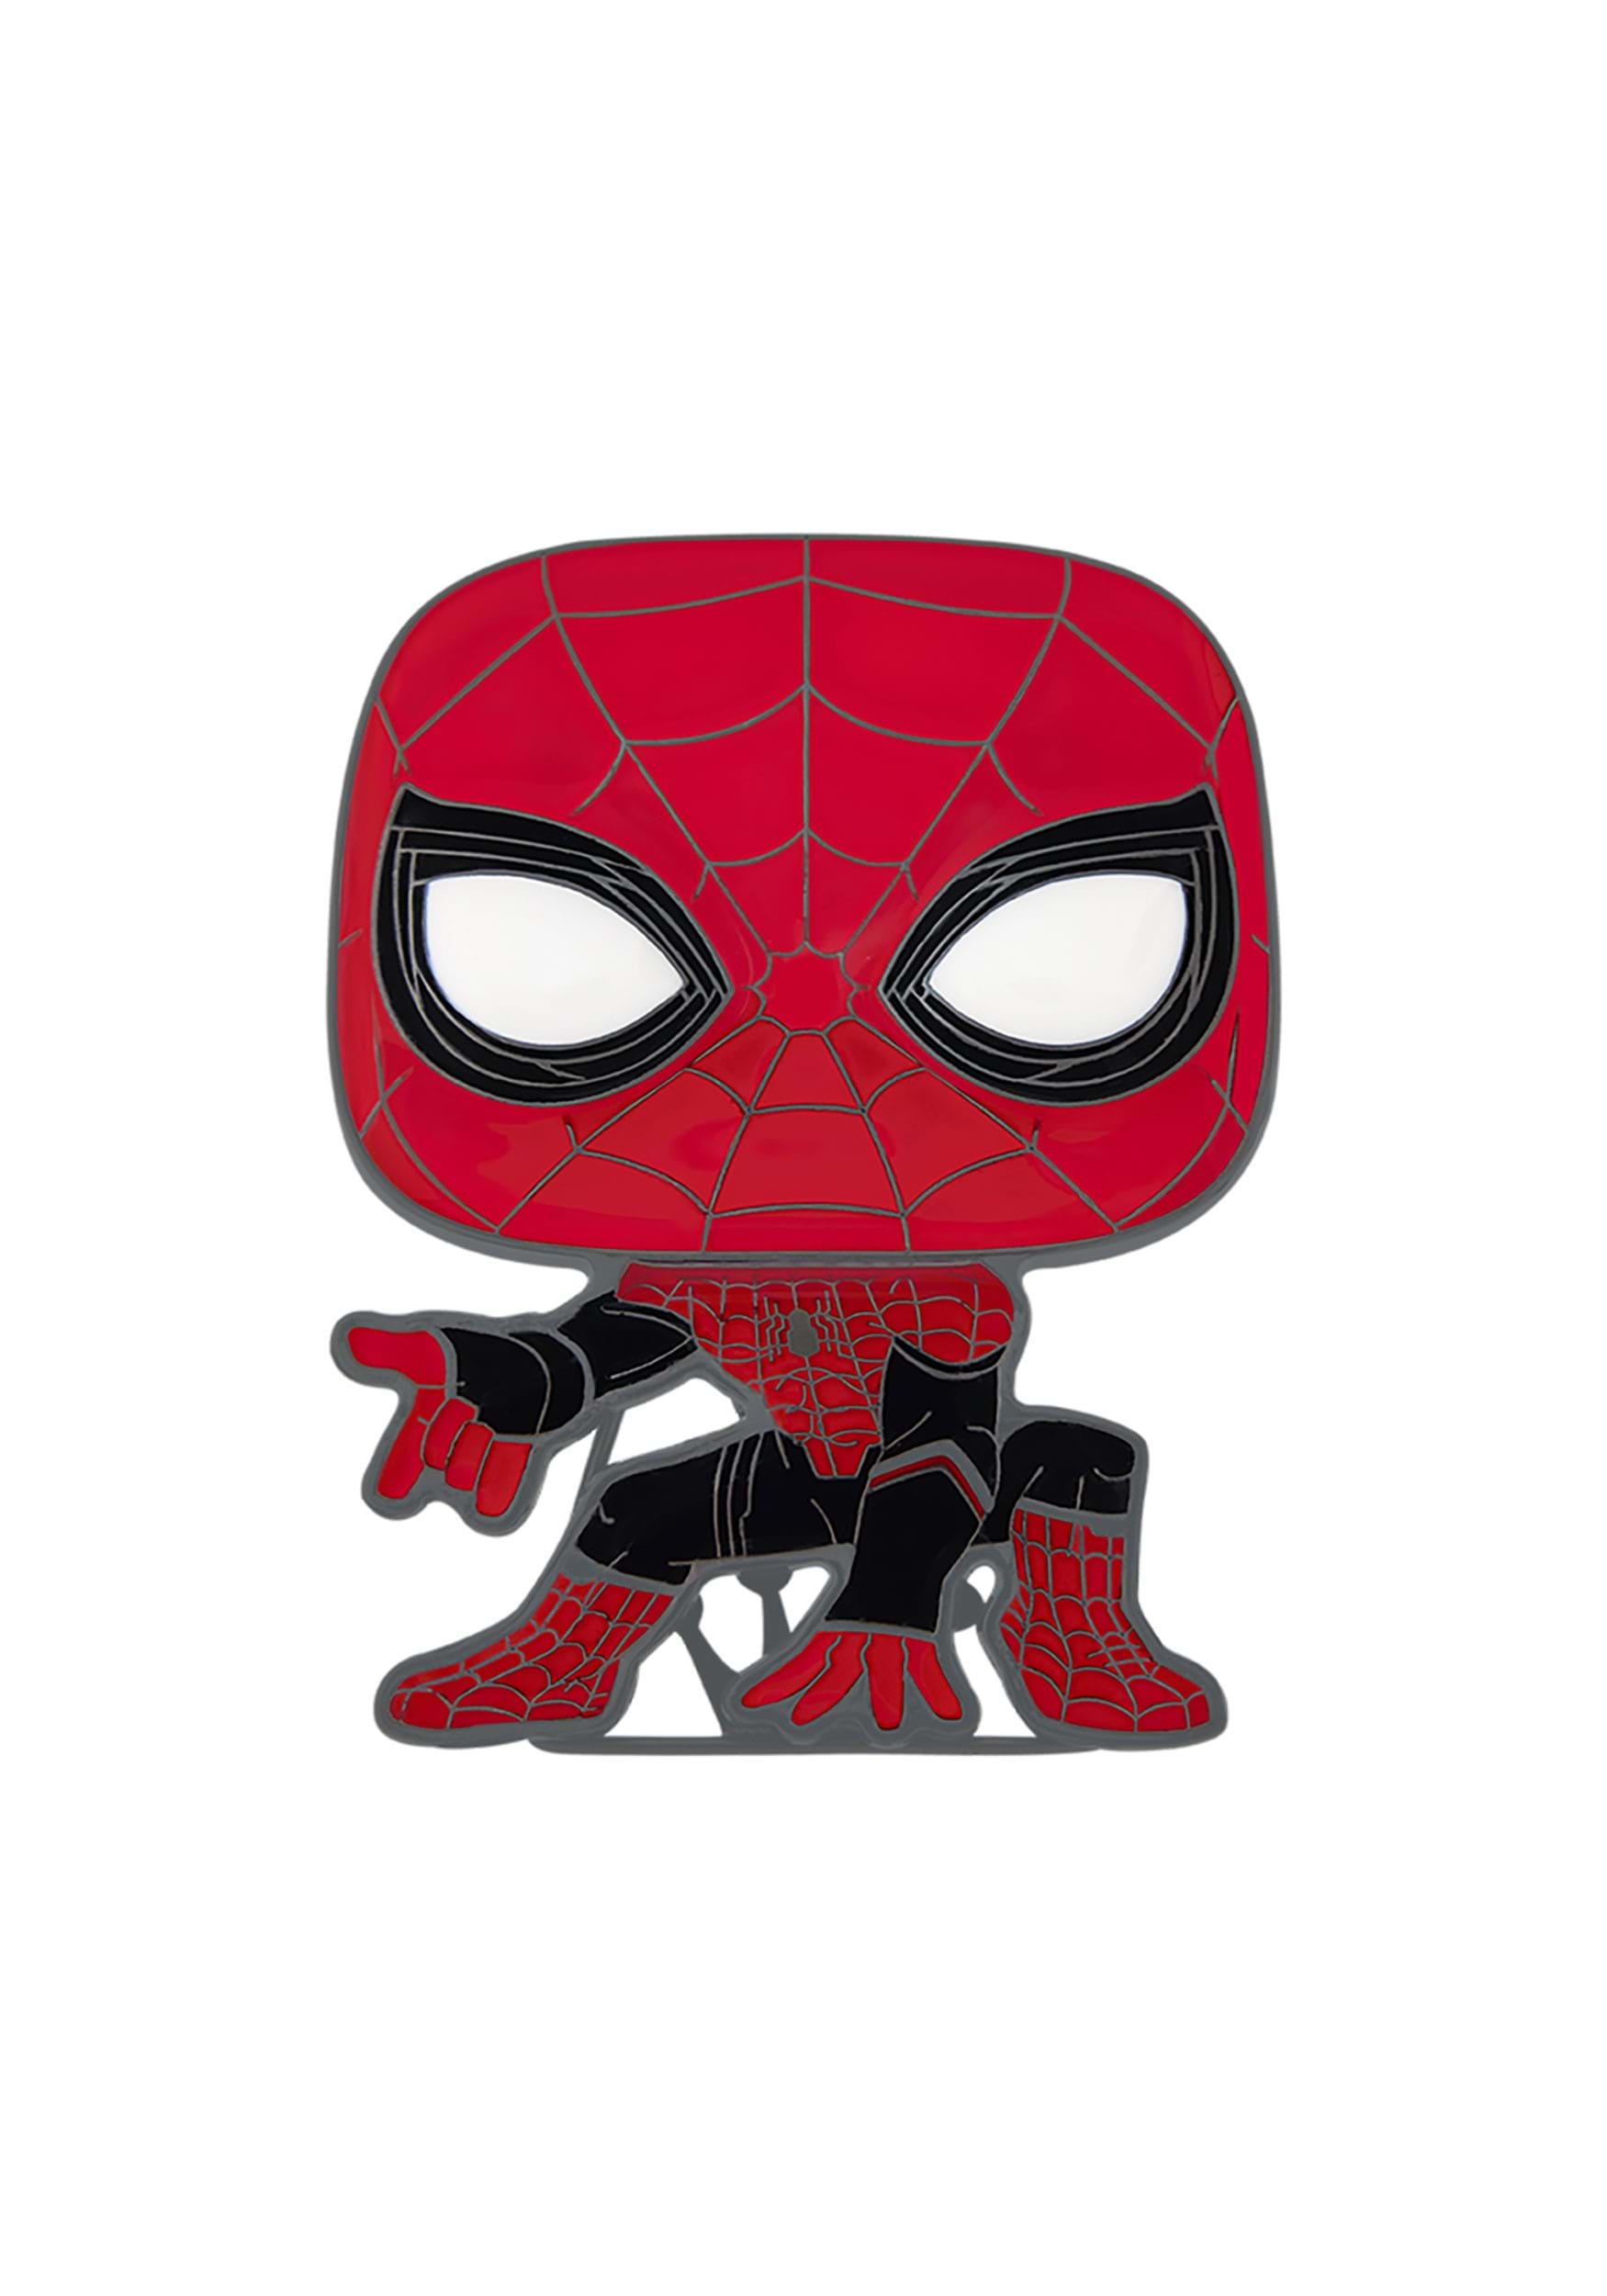 Spider-Man (Character) Image by Kenko #155628 - Zerochan Anime Image Board